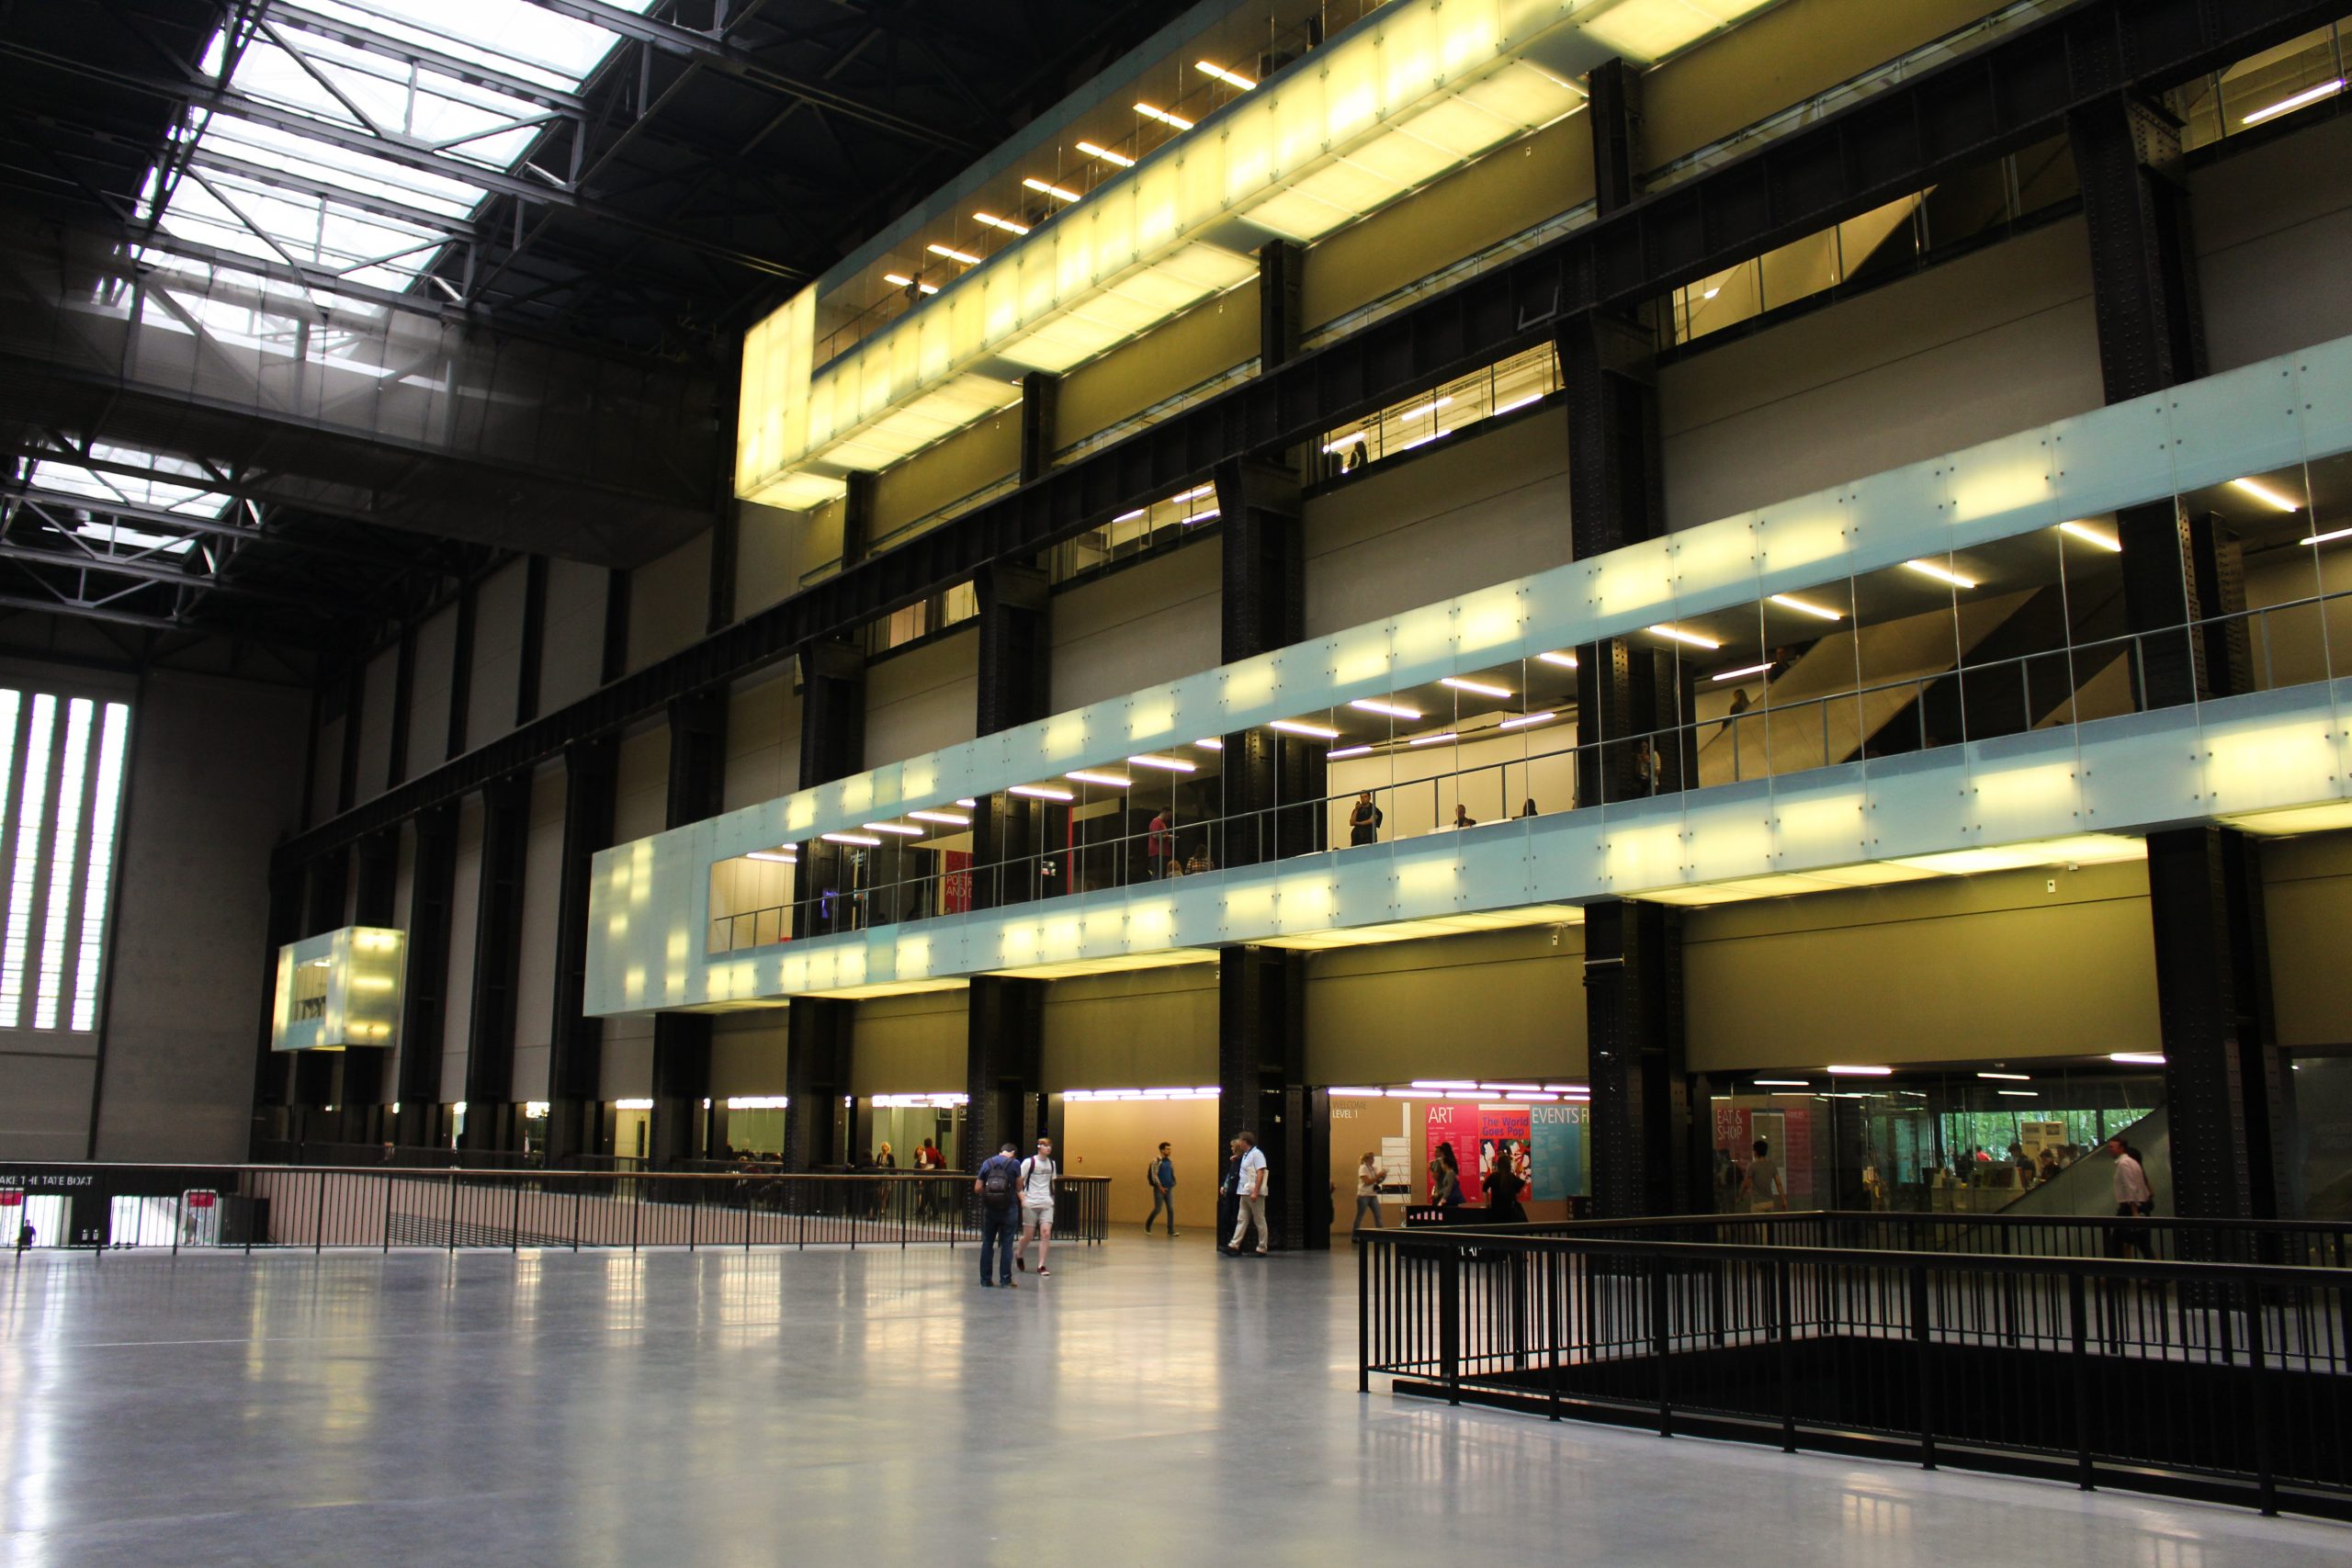 The Turbine Hall at Tate Modern